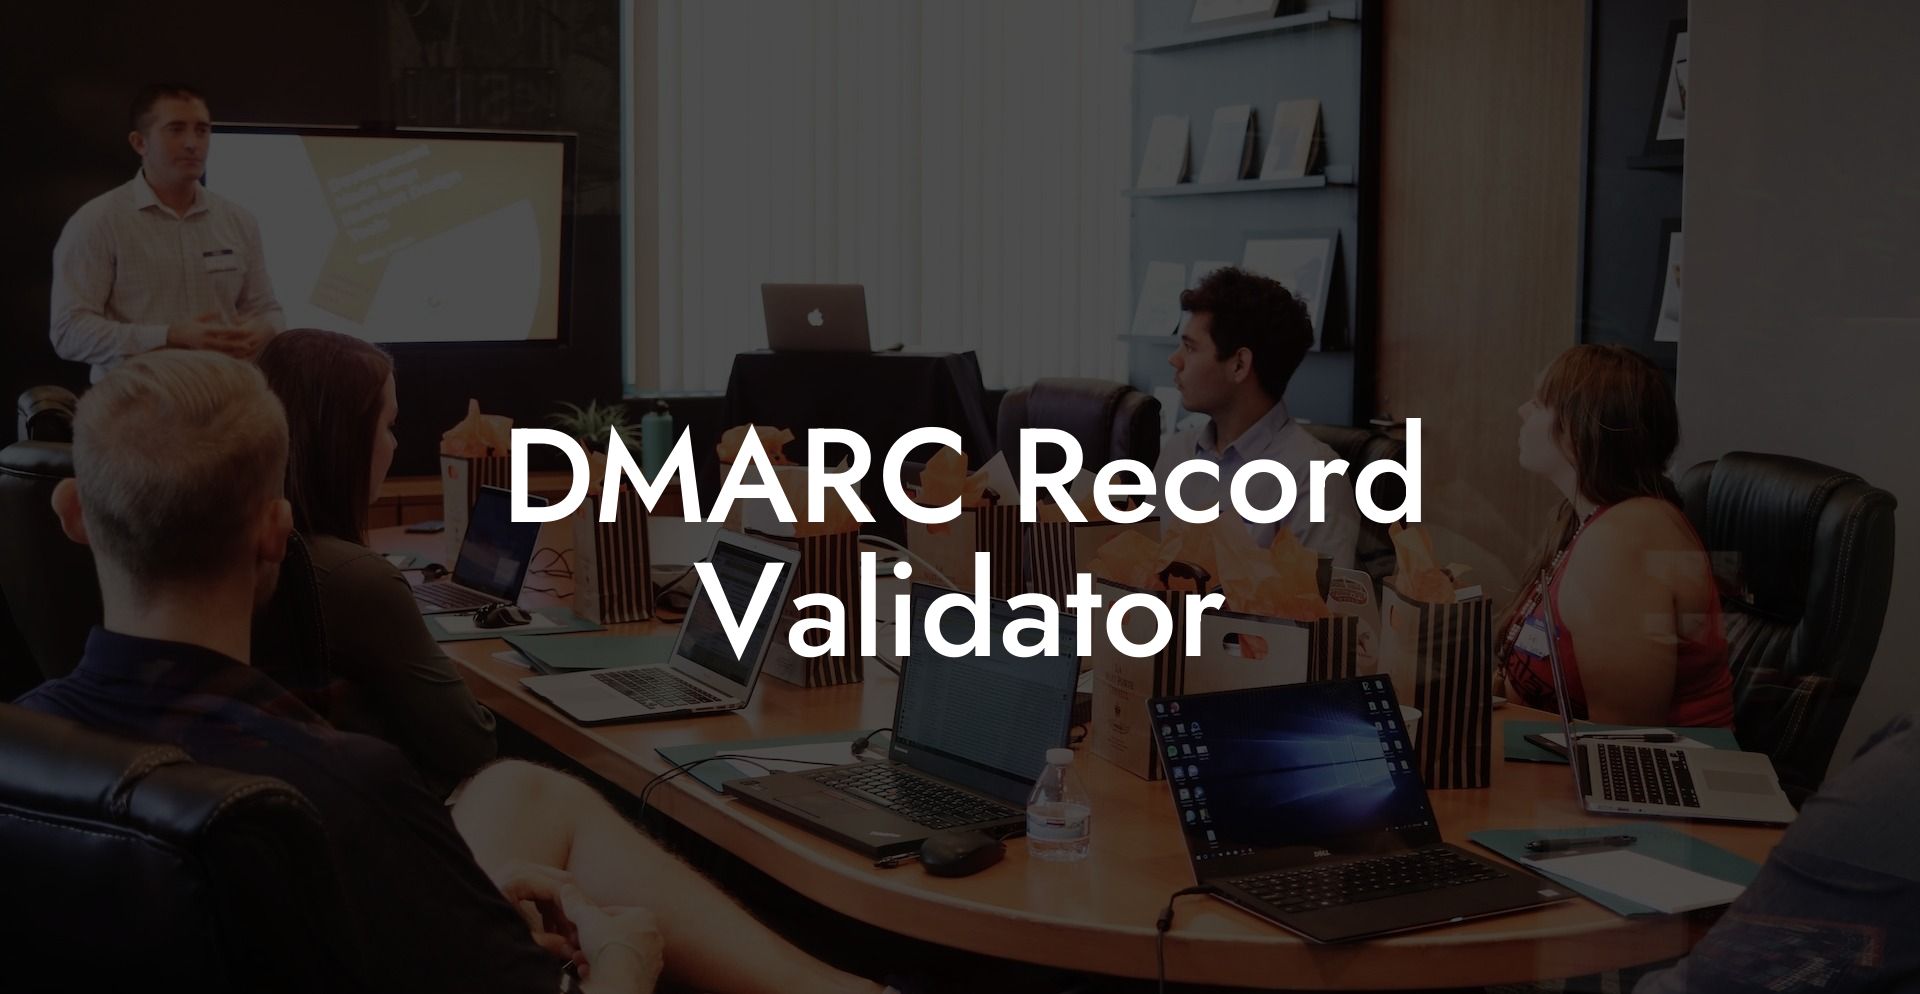 DMARC Record Validator